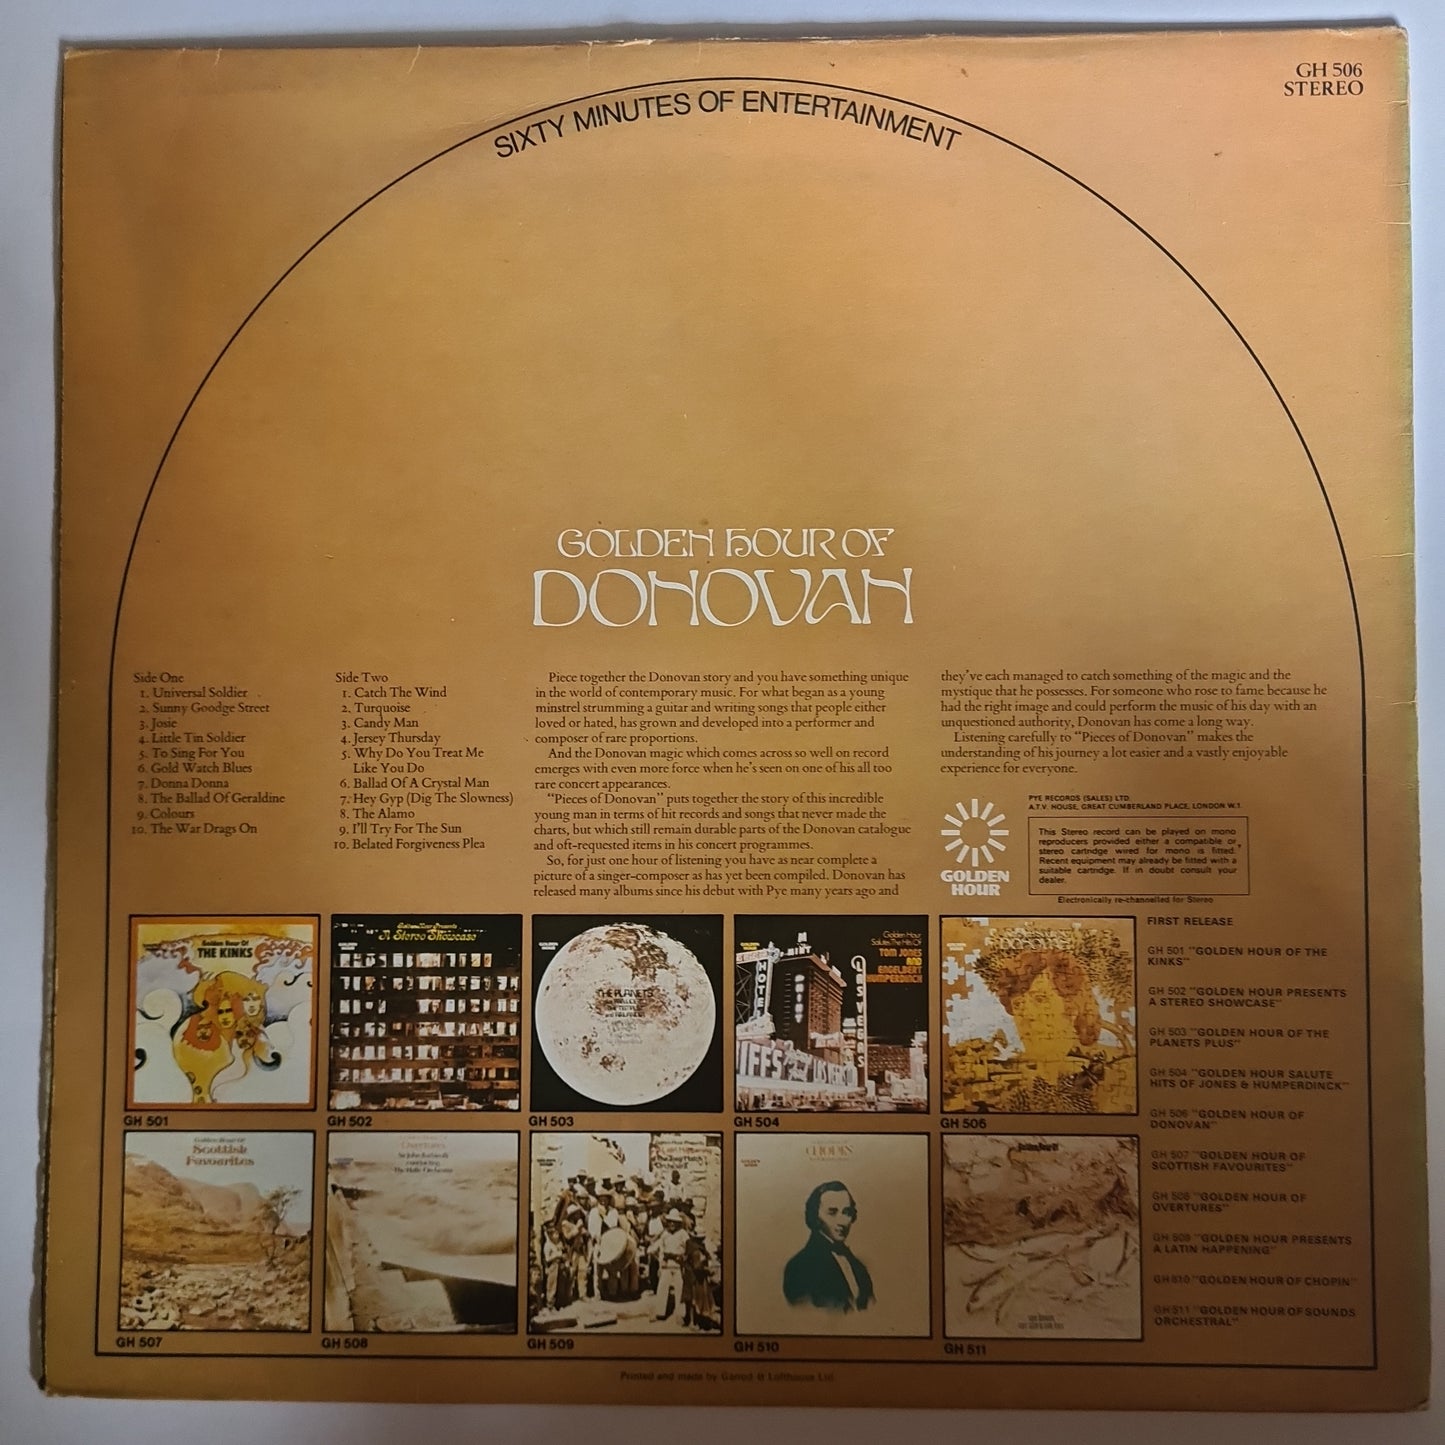 Donovan – Golden Hour Of Donovan (Greatest Hits) - 1971 - Vinyl Record